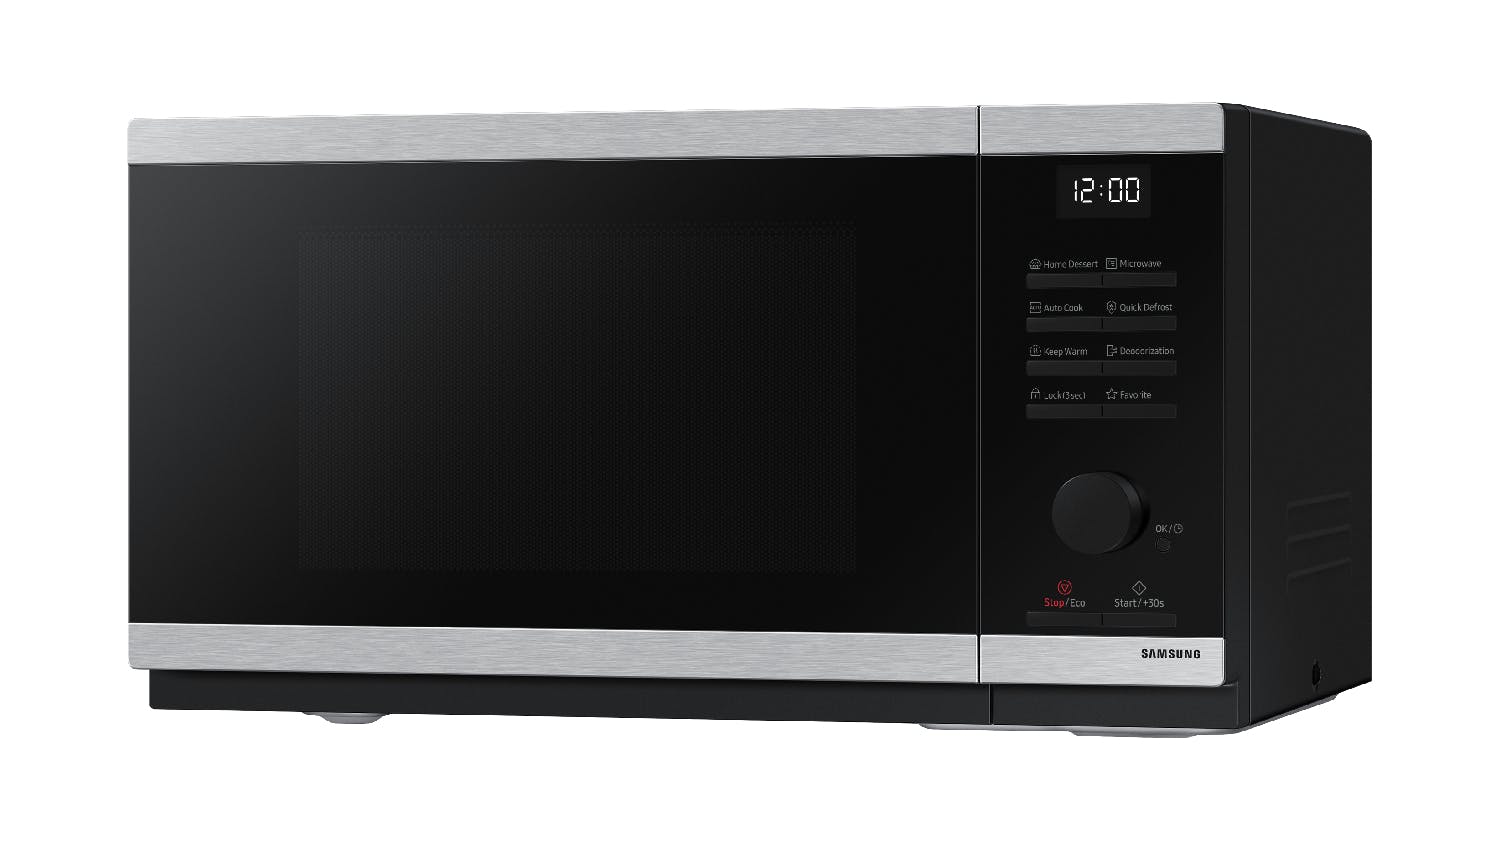 Samsung 23L 8000W Microwave - Black (MS32DG4504ATSA)